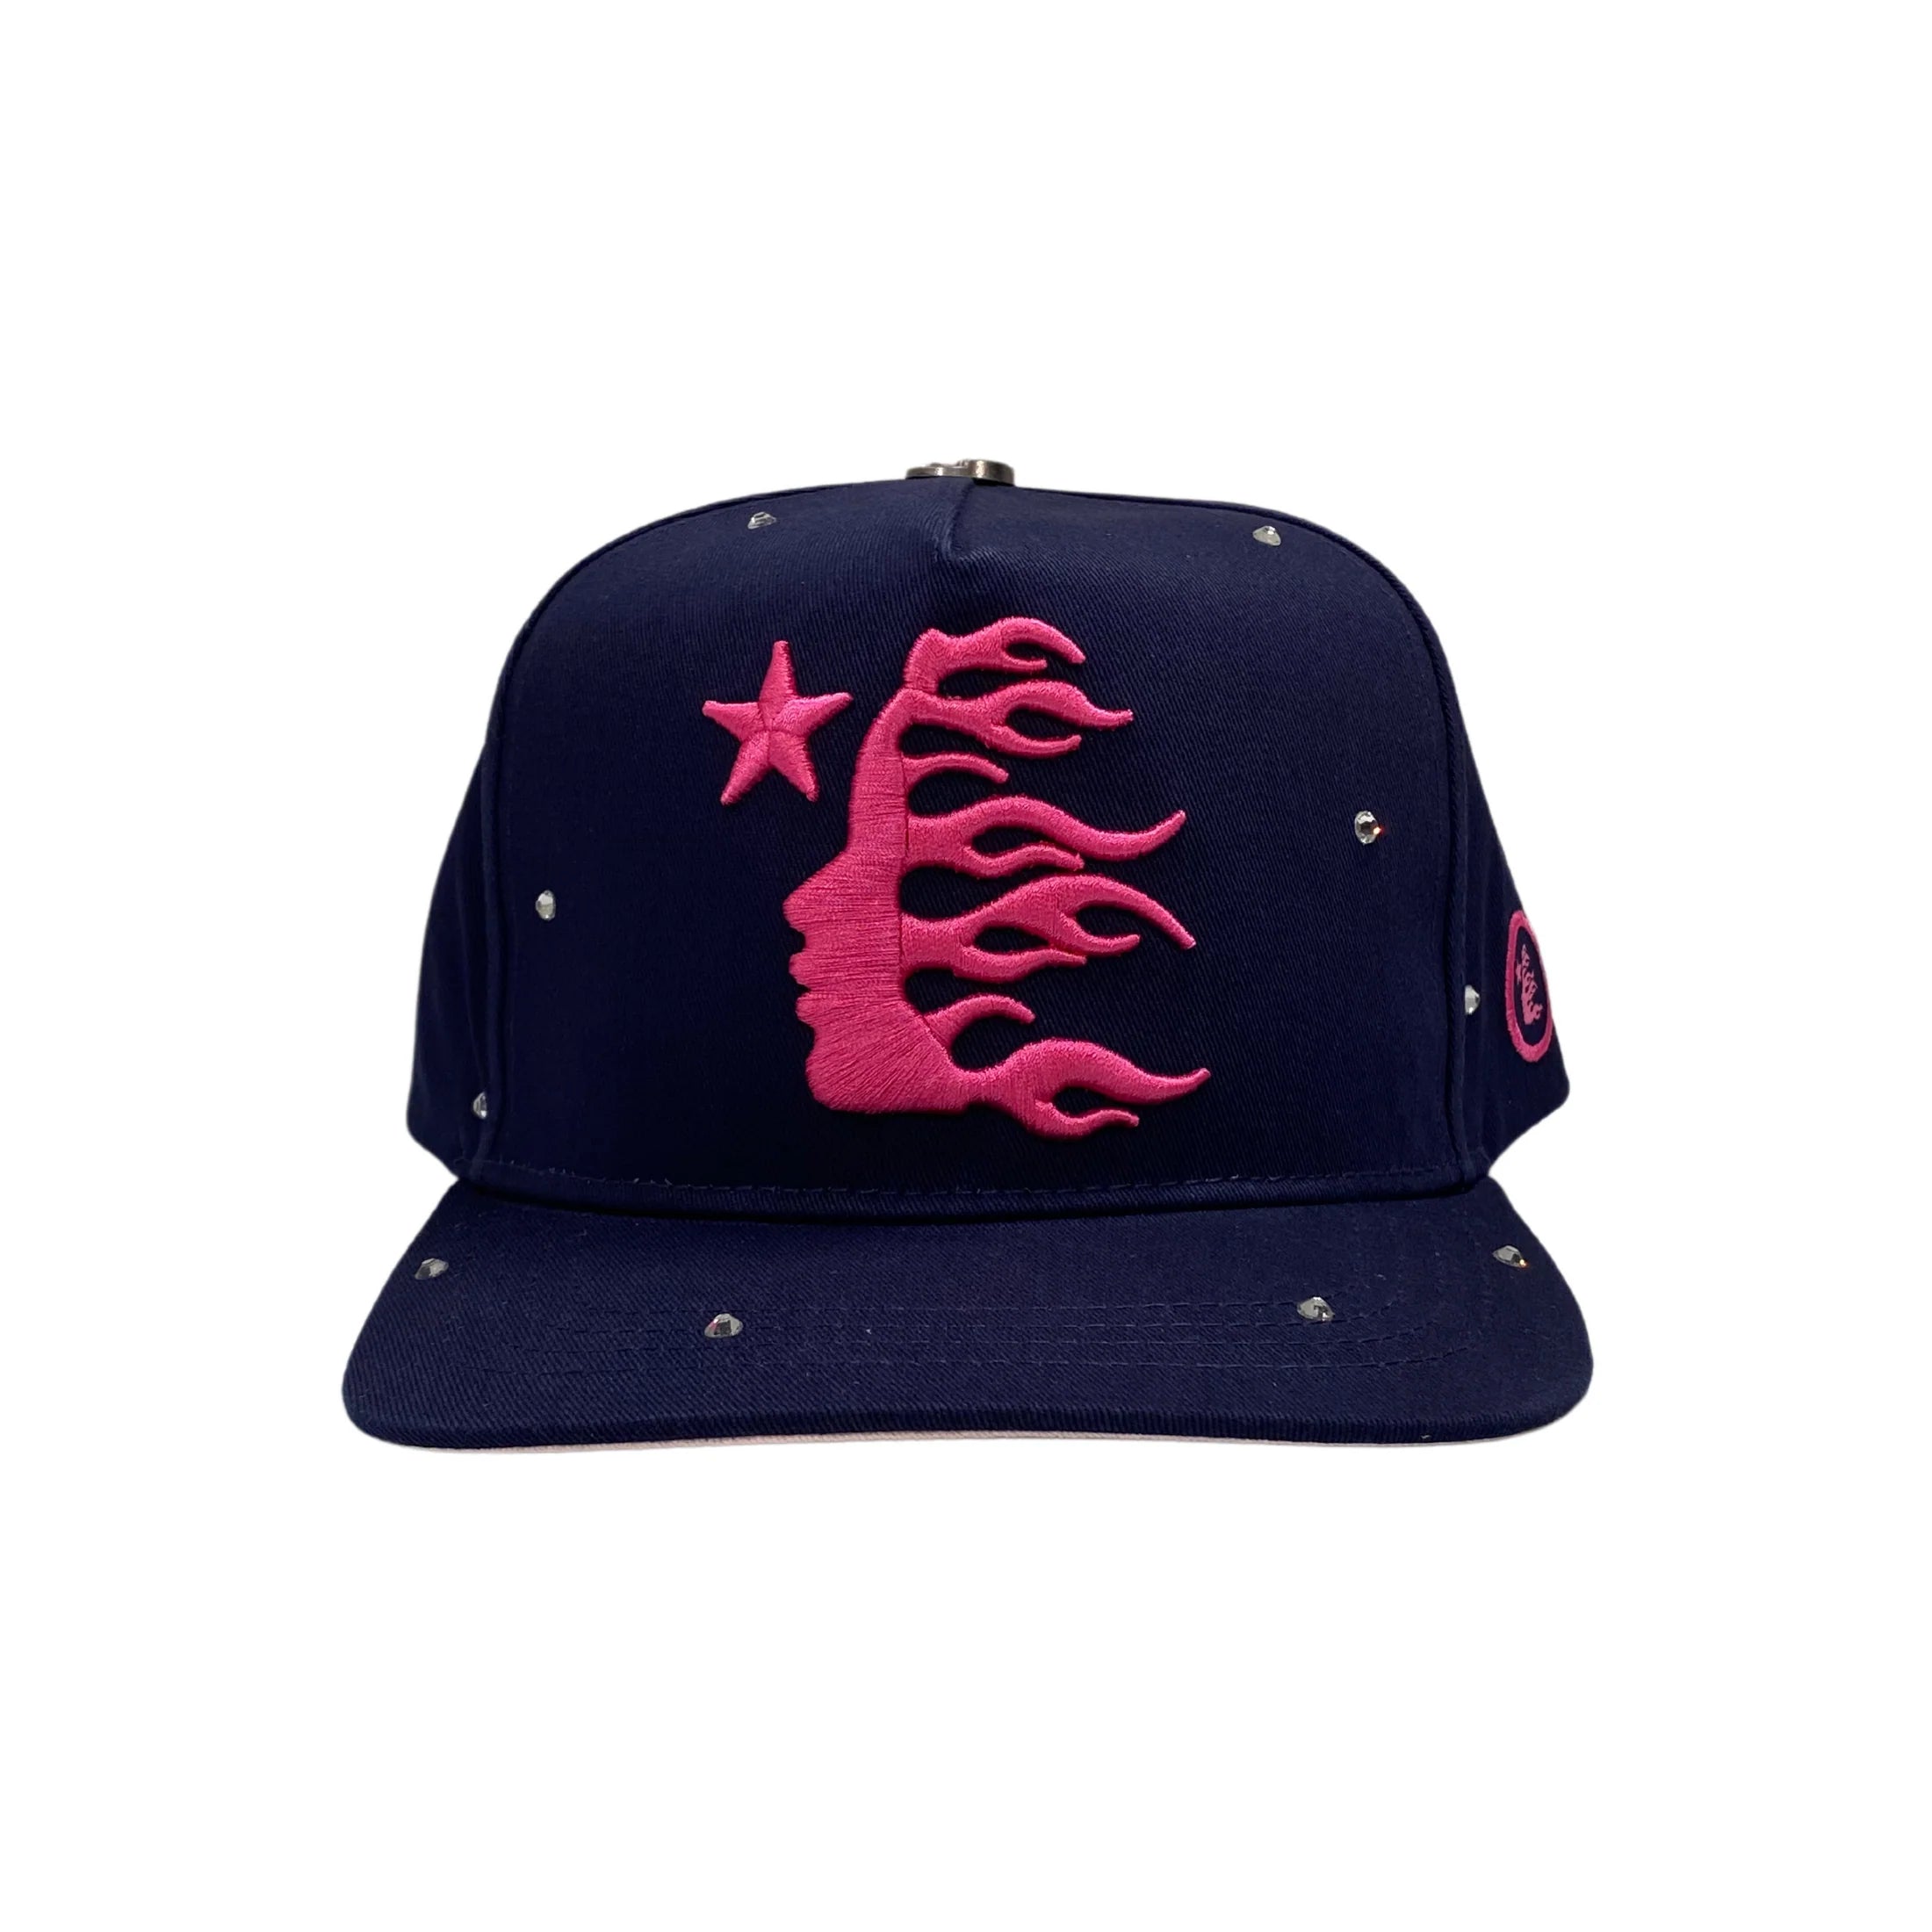 Hellstar Logo 6-Panel Snapback Hat Navy Pink Rhinestone